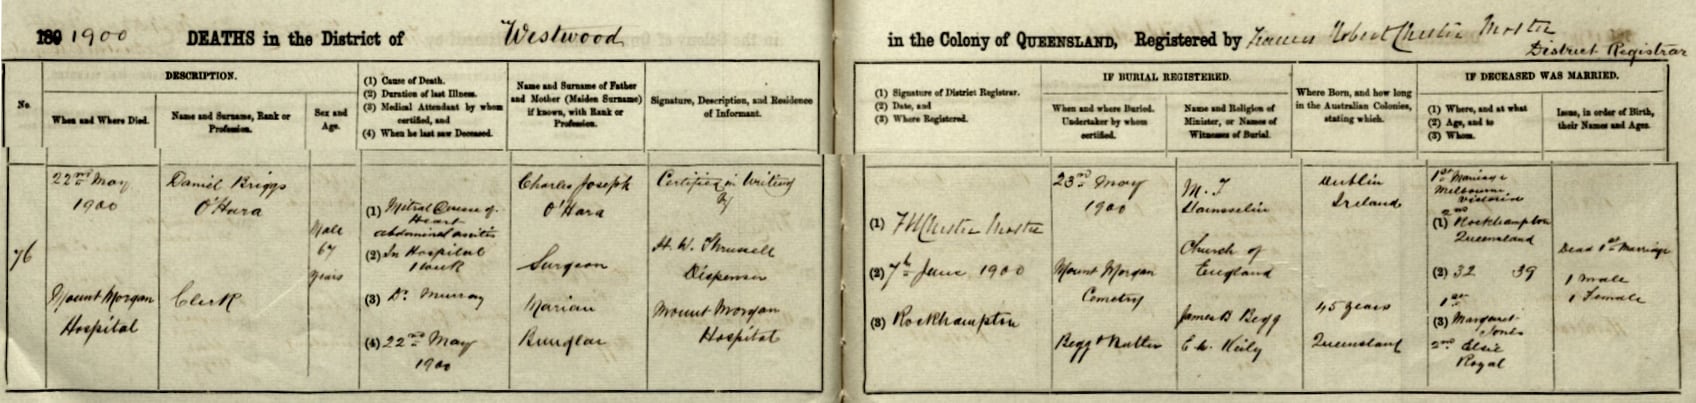 Daniel Briggs O'Hara death certificate 1900